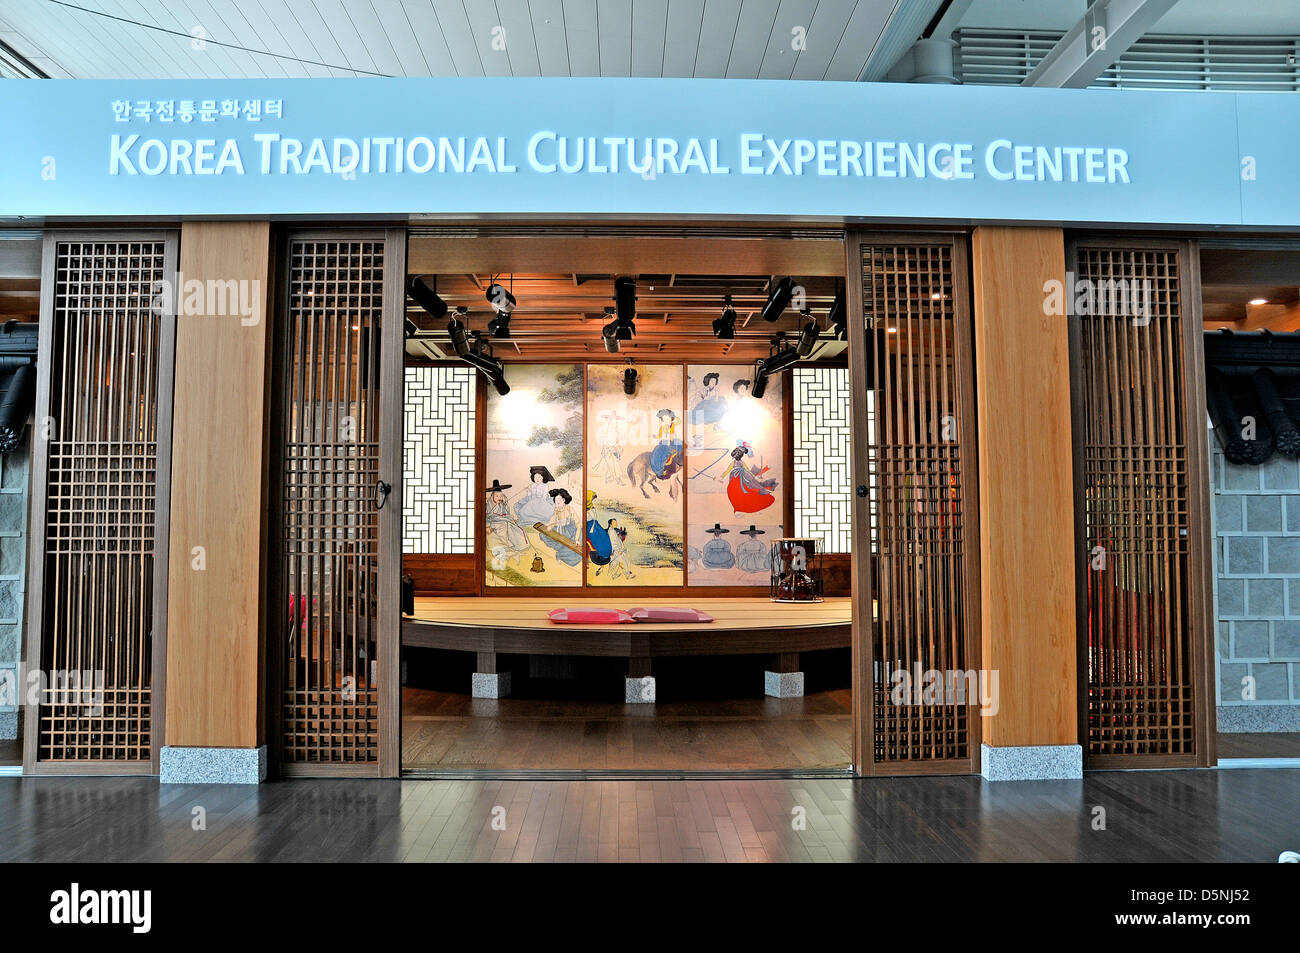 Korea traditional cultural experience center Incheon international airport South Korea Stock Photo